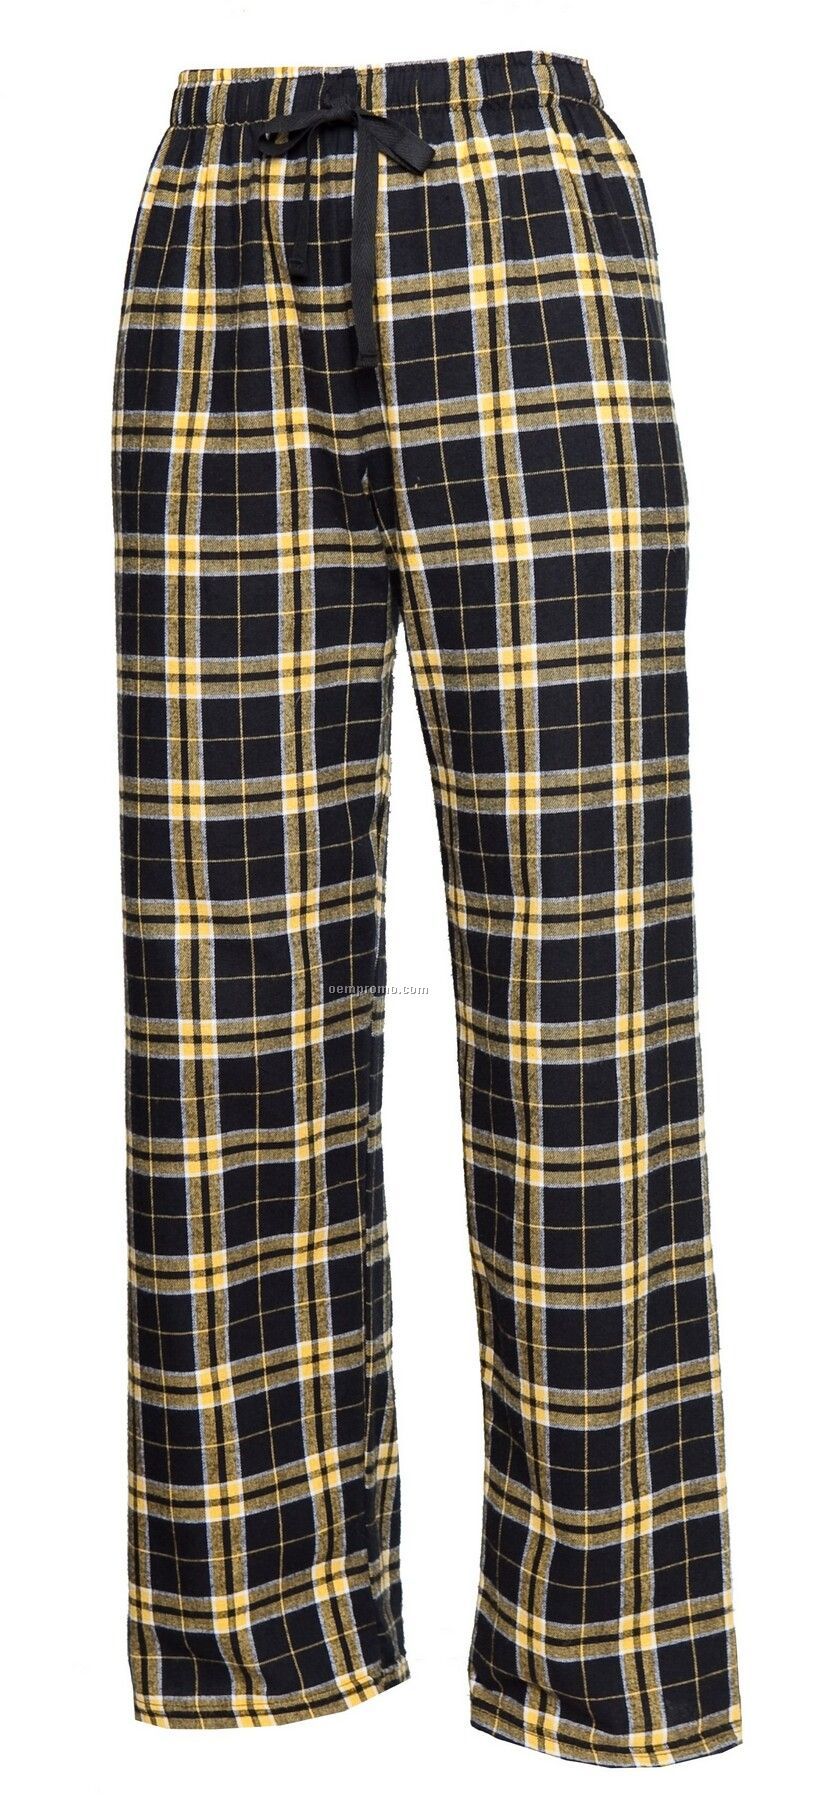 black and gold plaid pants